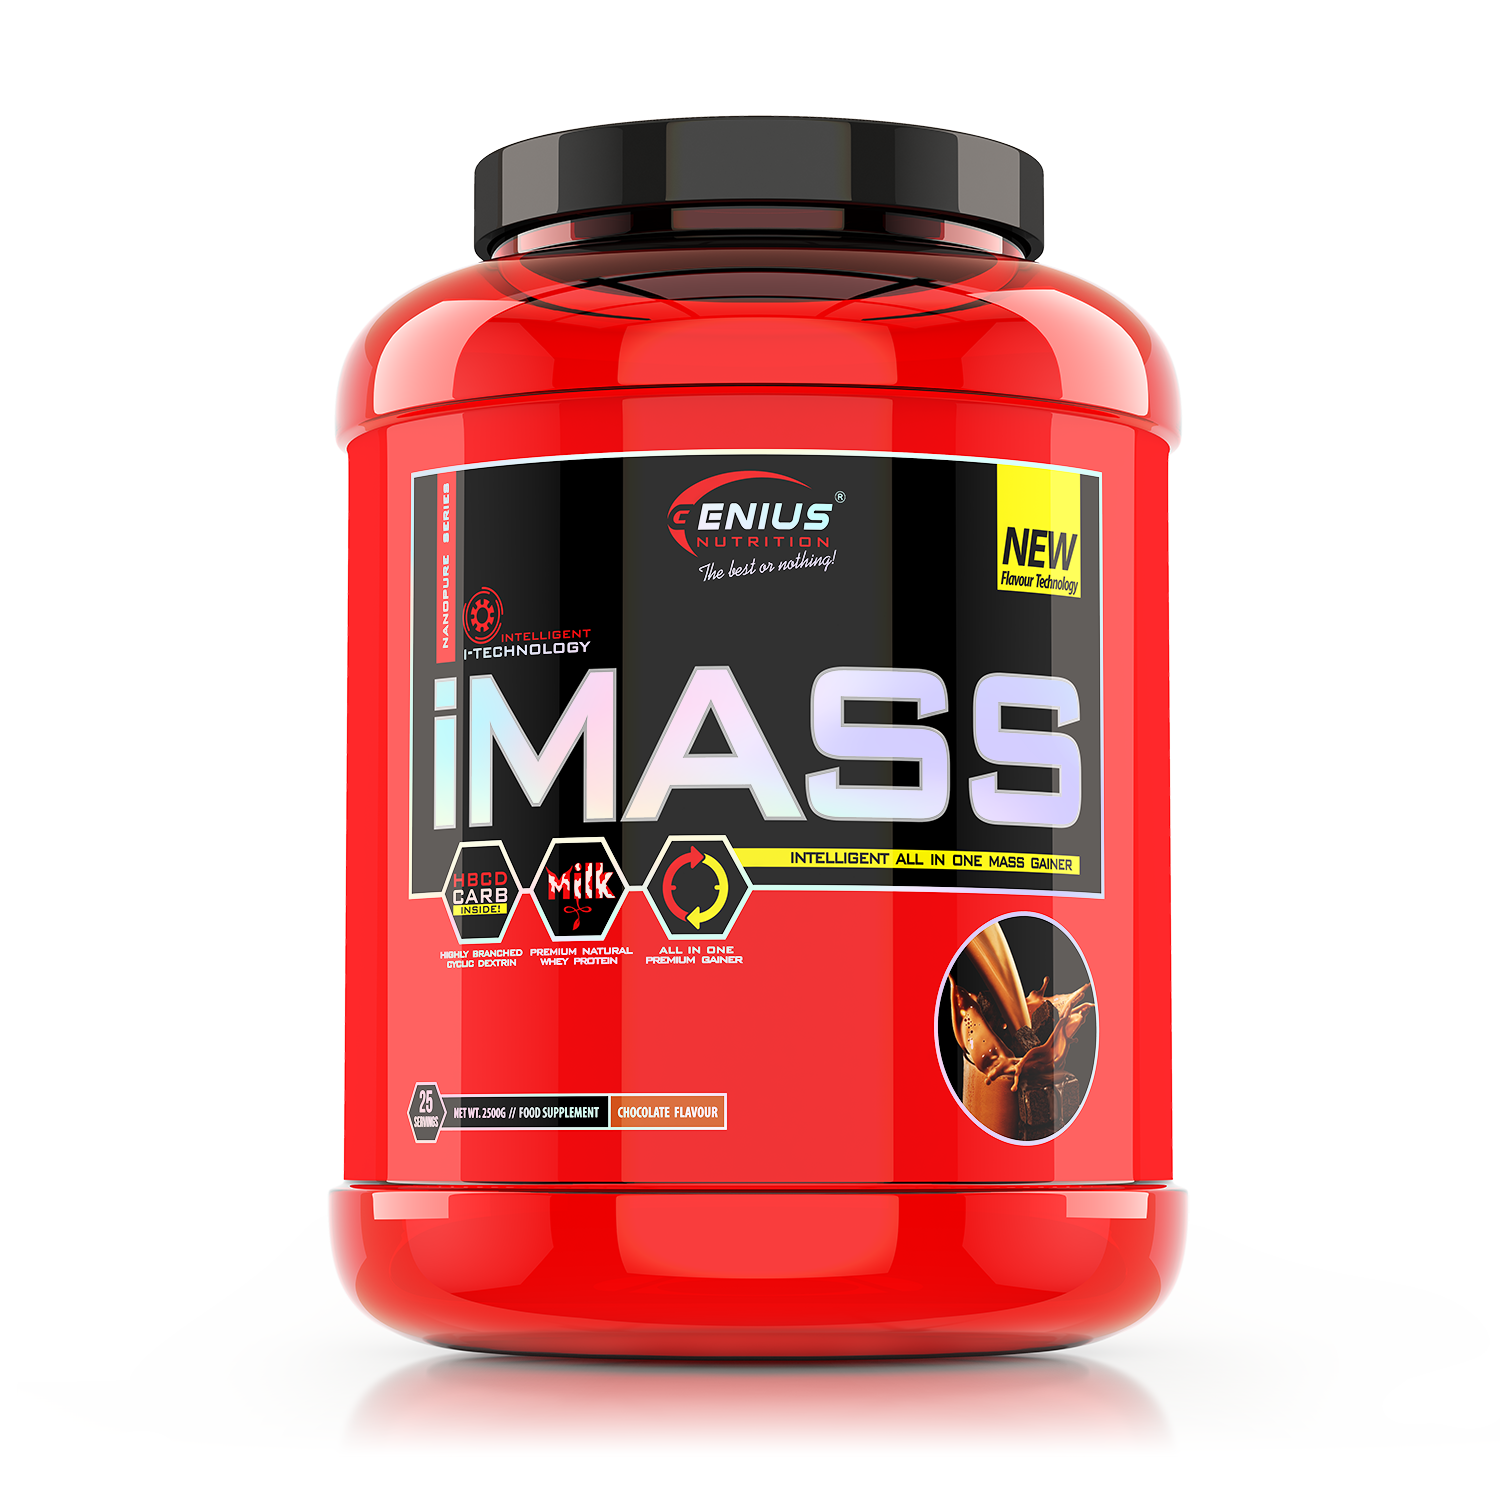 Genius - iMass - 2.5 kg Protein Outelt